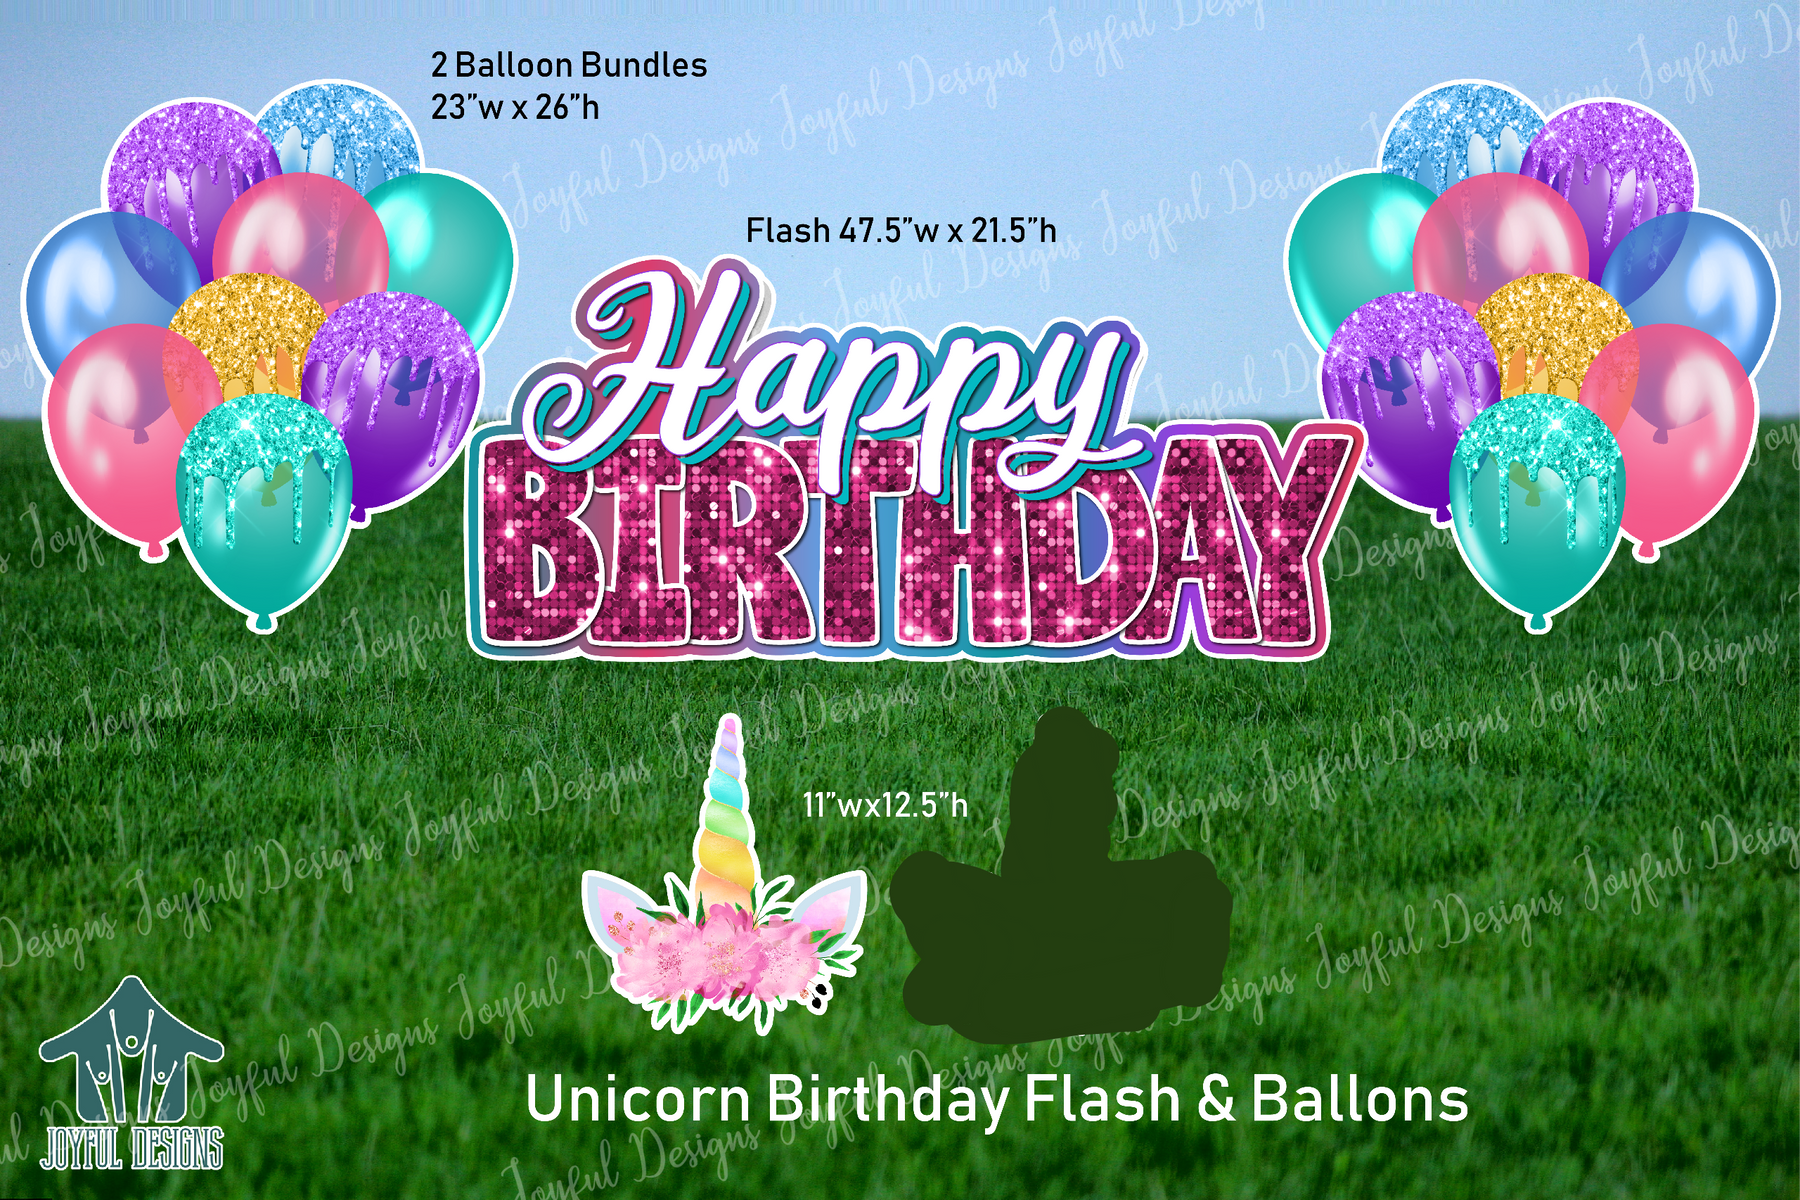 Unicorn Birthday Centerpiece and Balloons